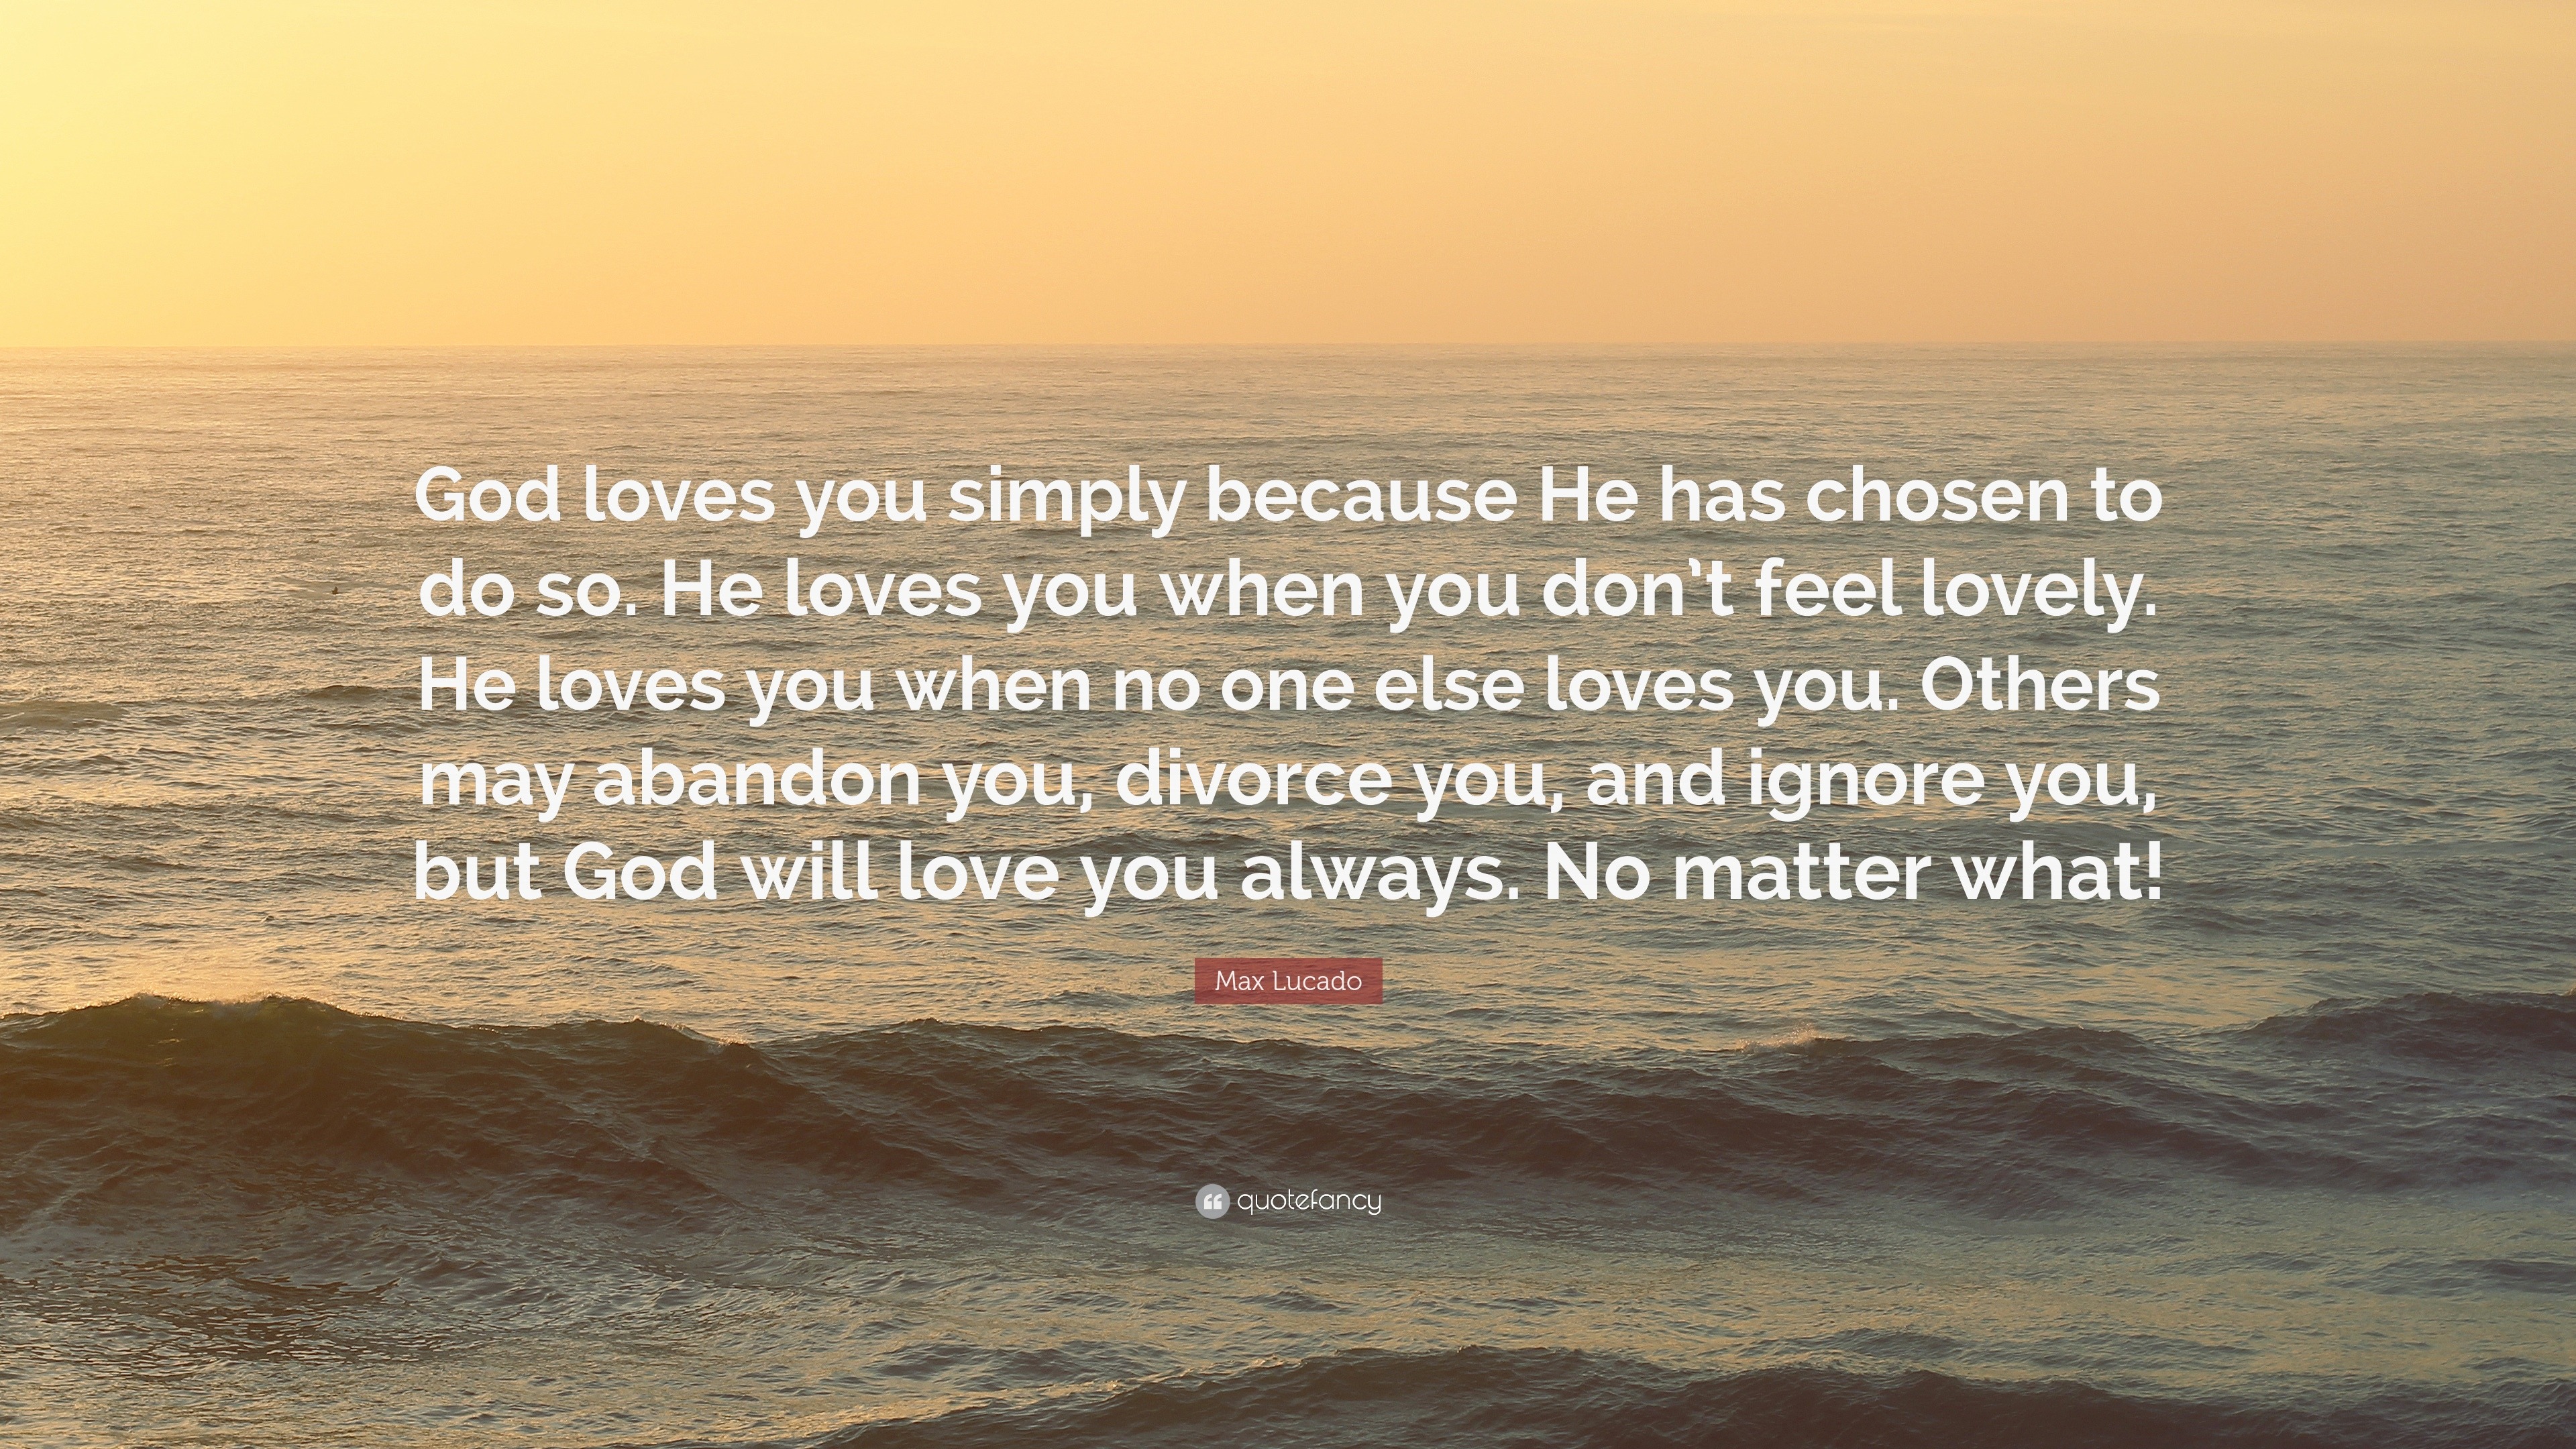 Max Lucado Quote: “God loves you simply because He has chosen to do so ...